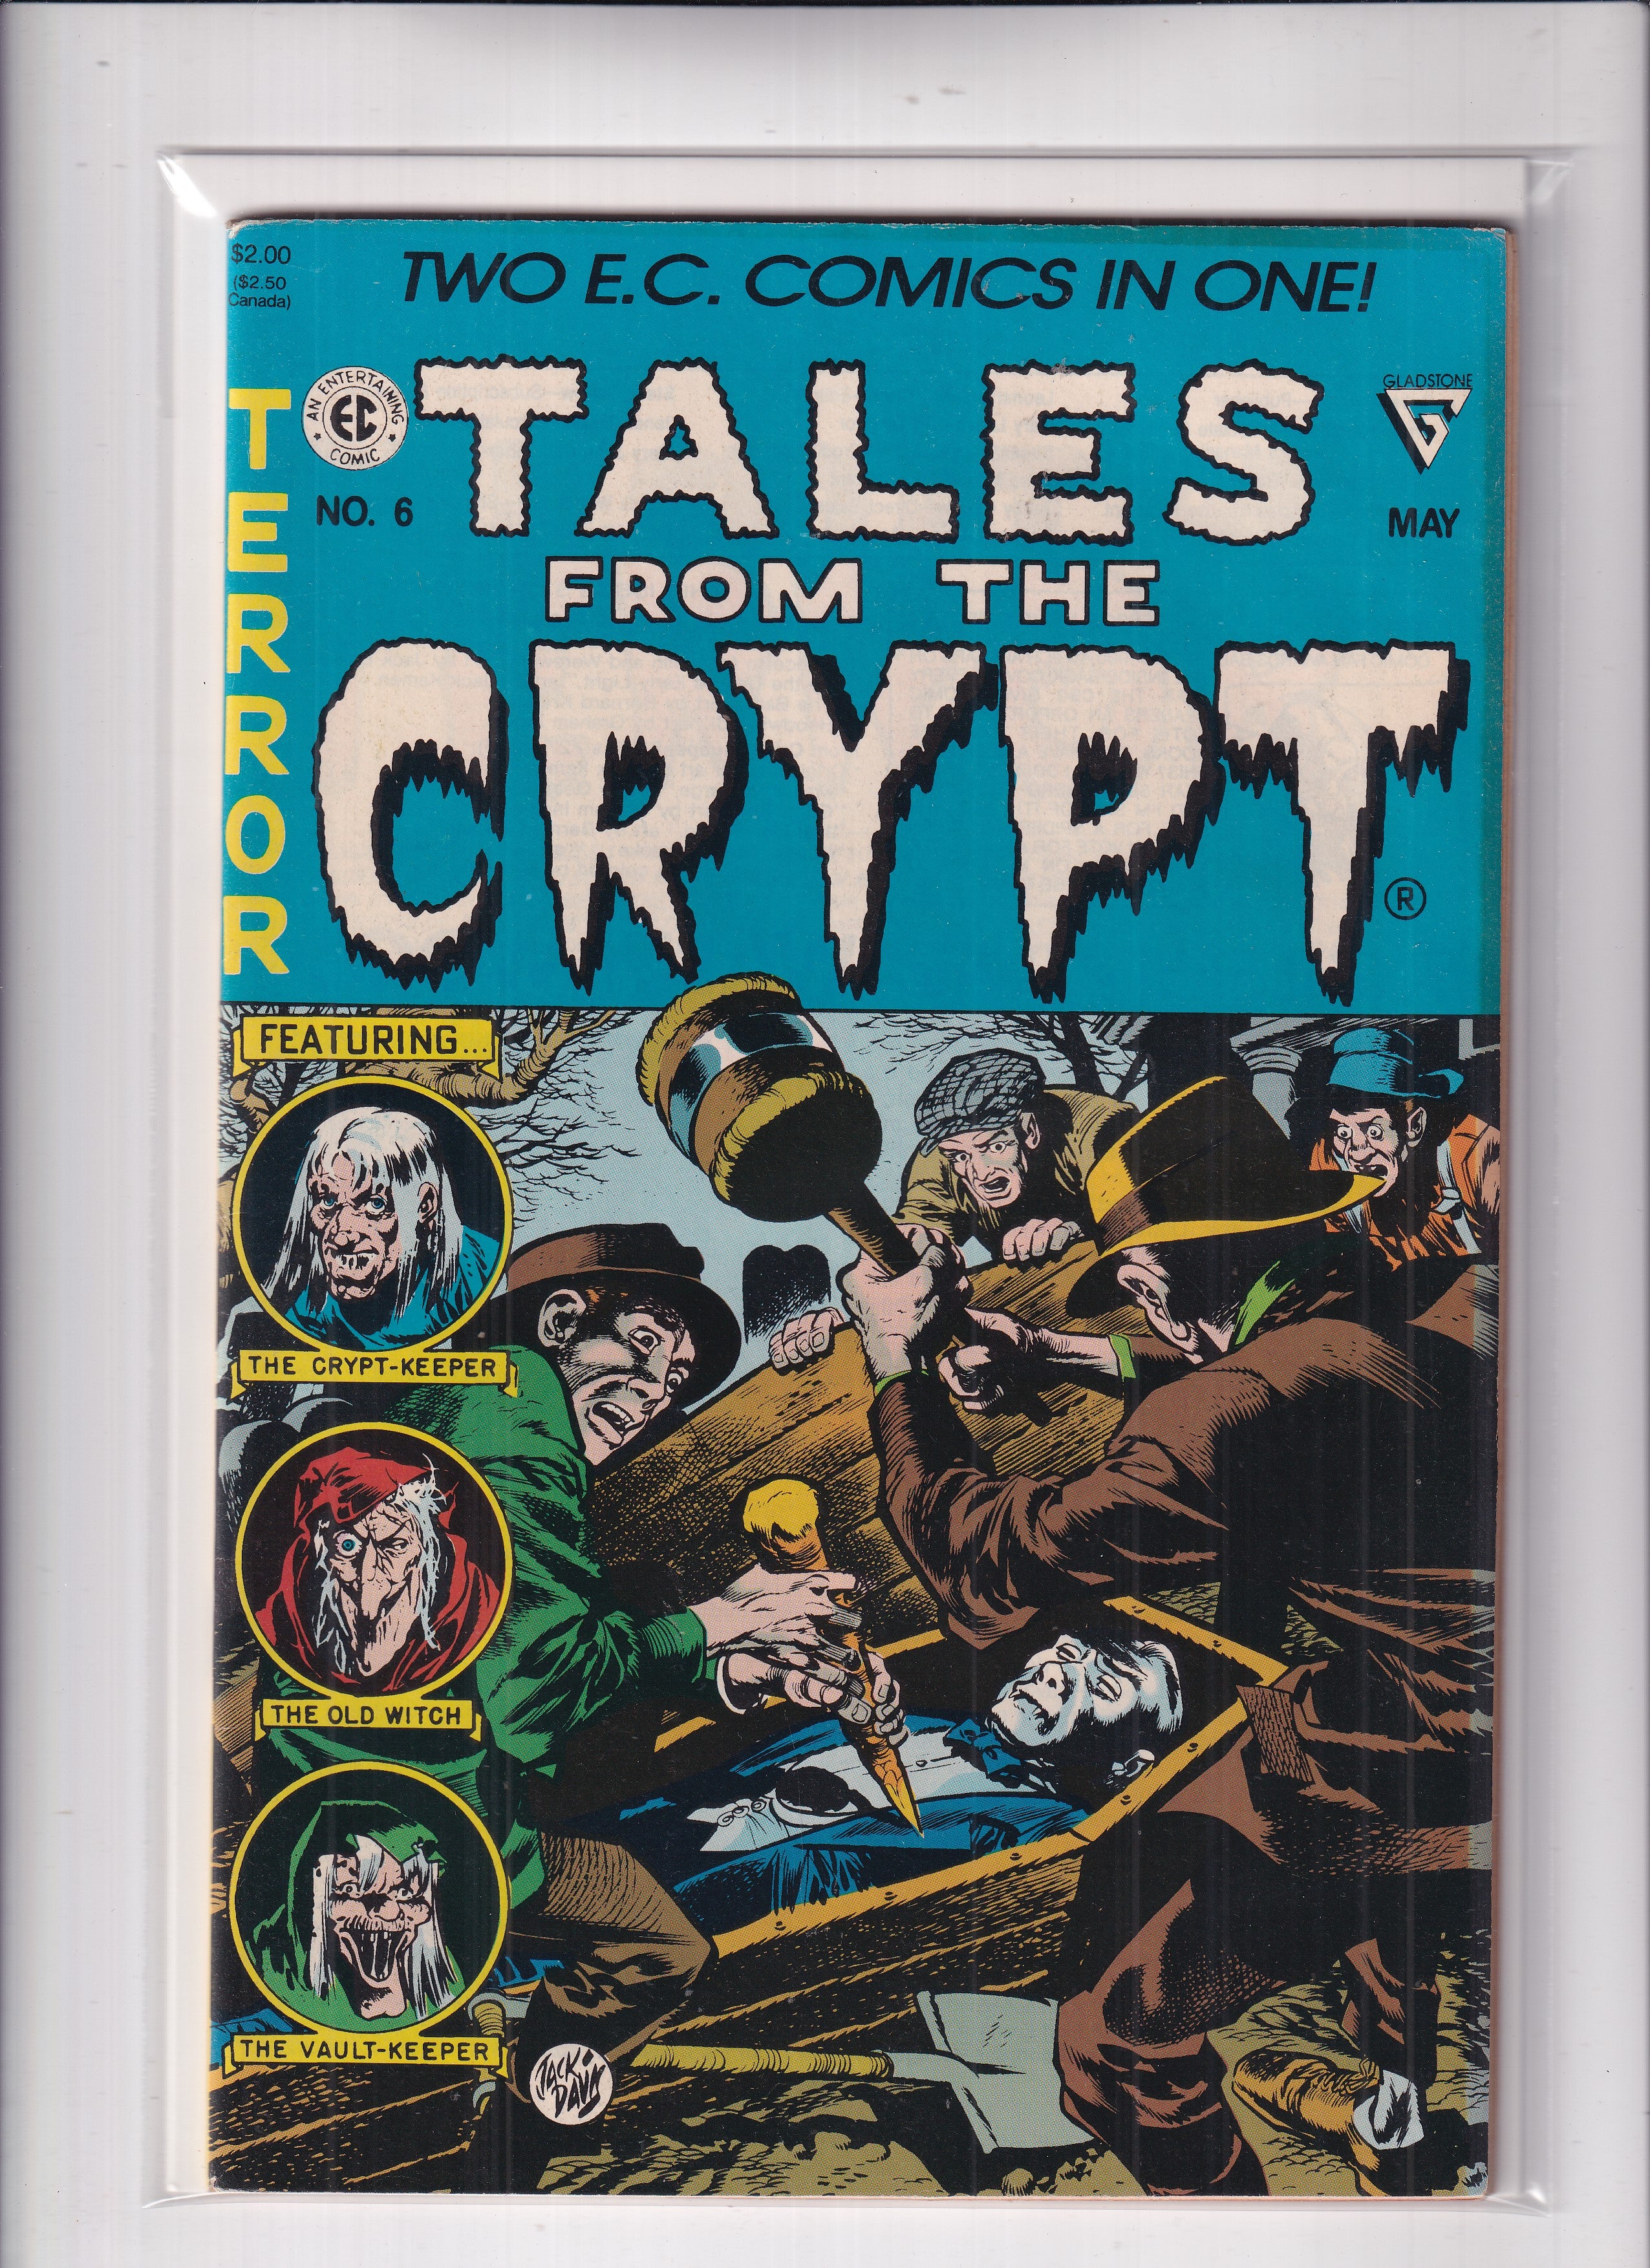 TALES FROM THE CRYPT #6 EC REPRINT - Slab City Comics 